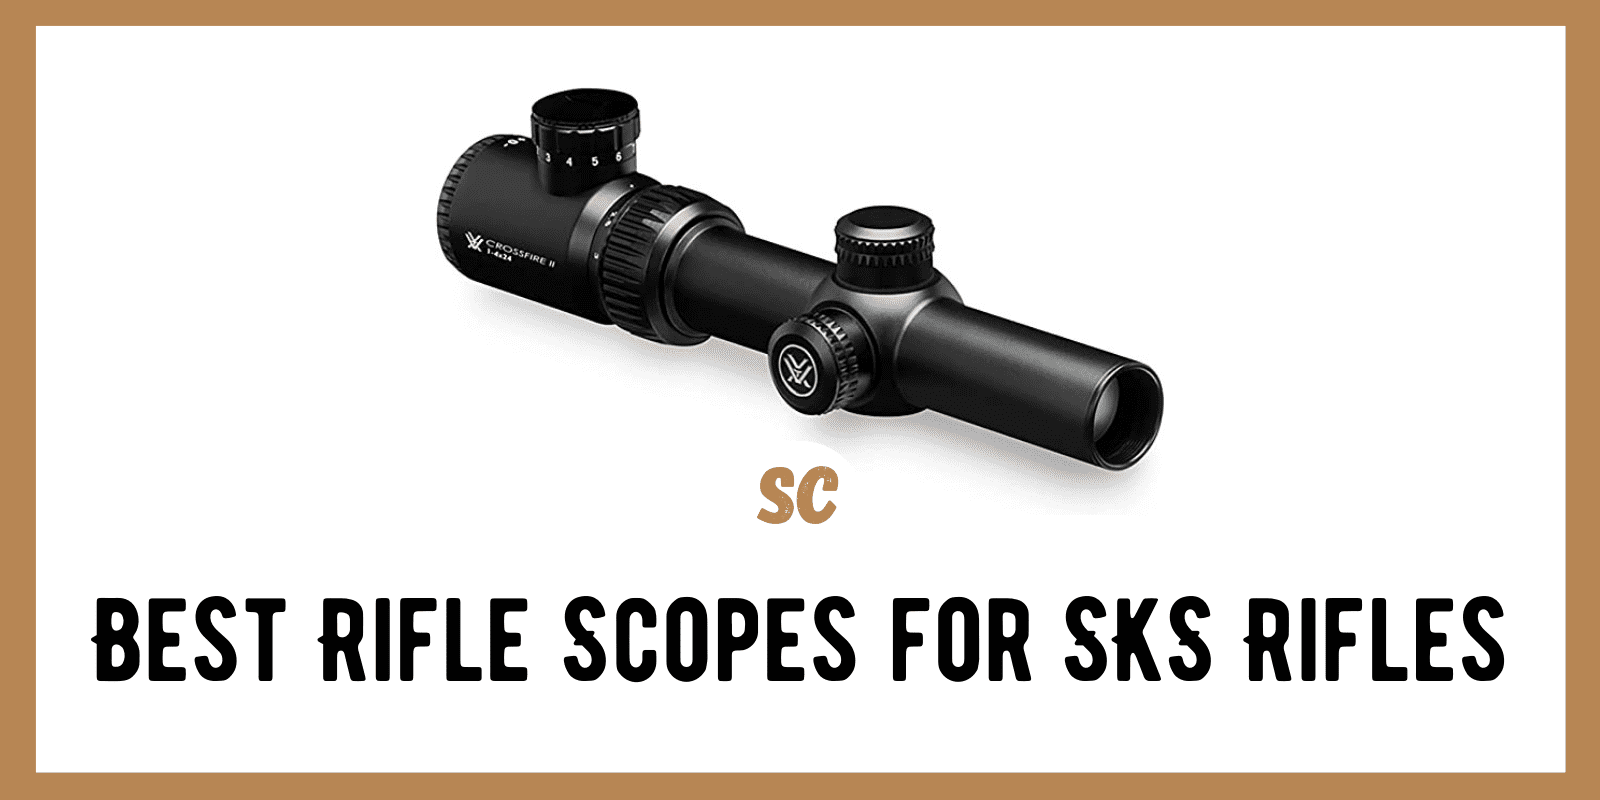 The Best SKS Scope – Expert’s 5 Top Picks